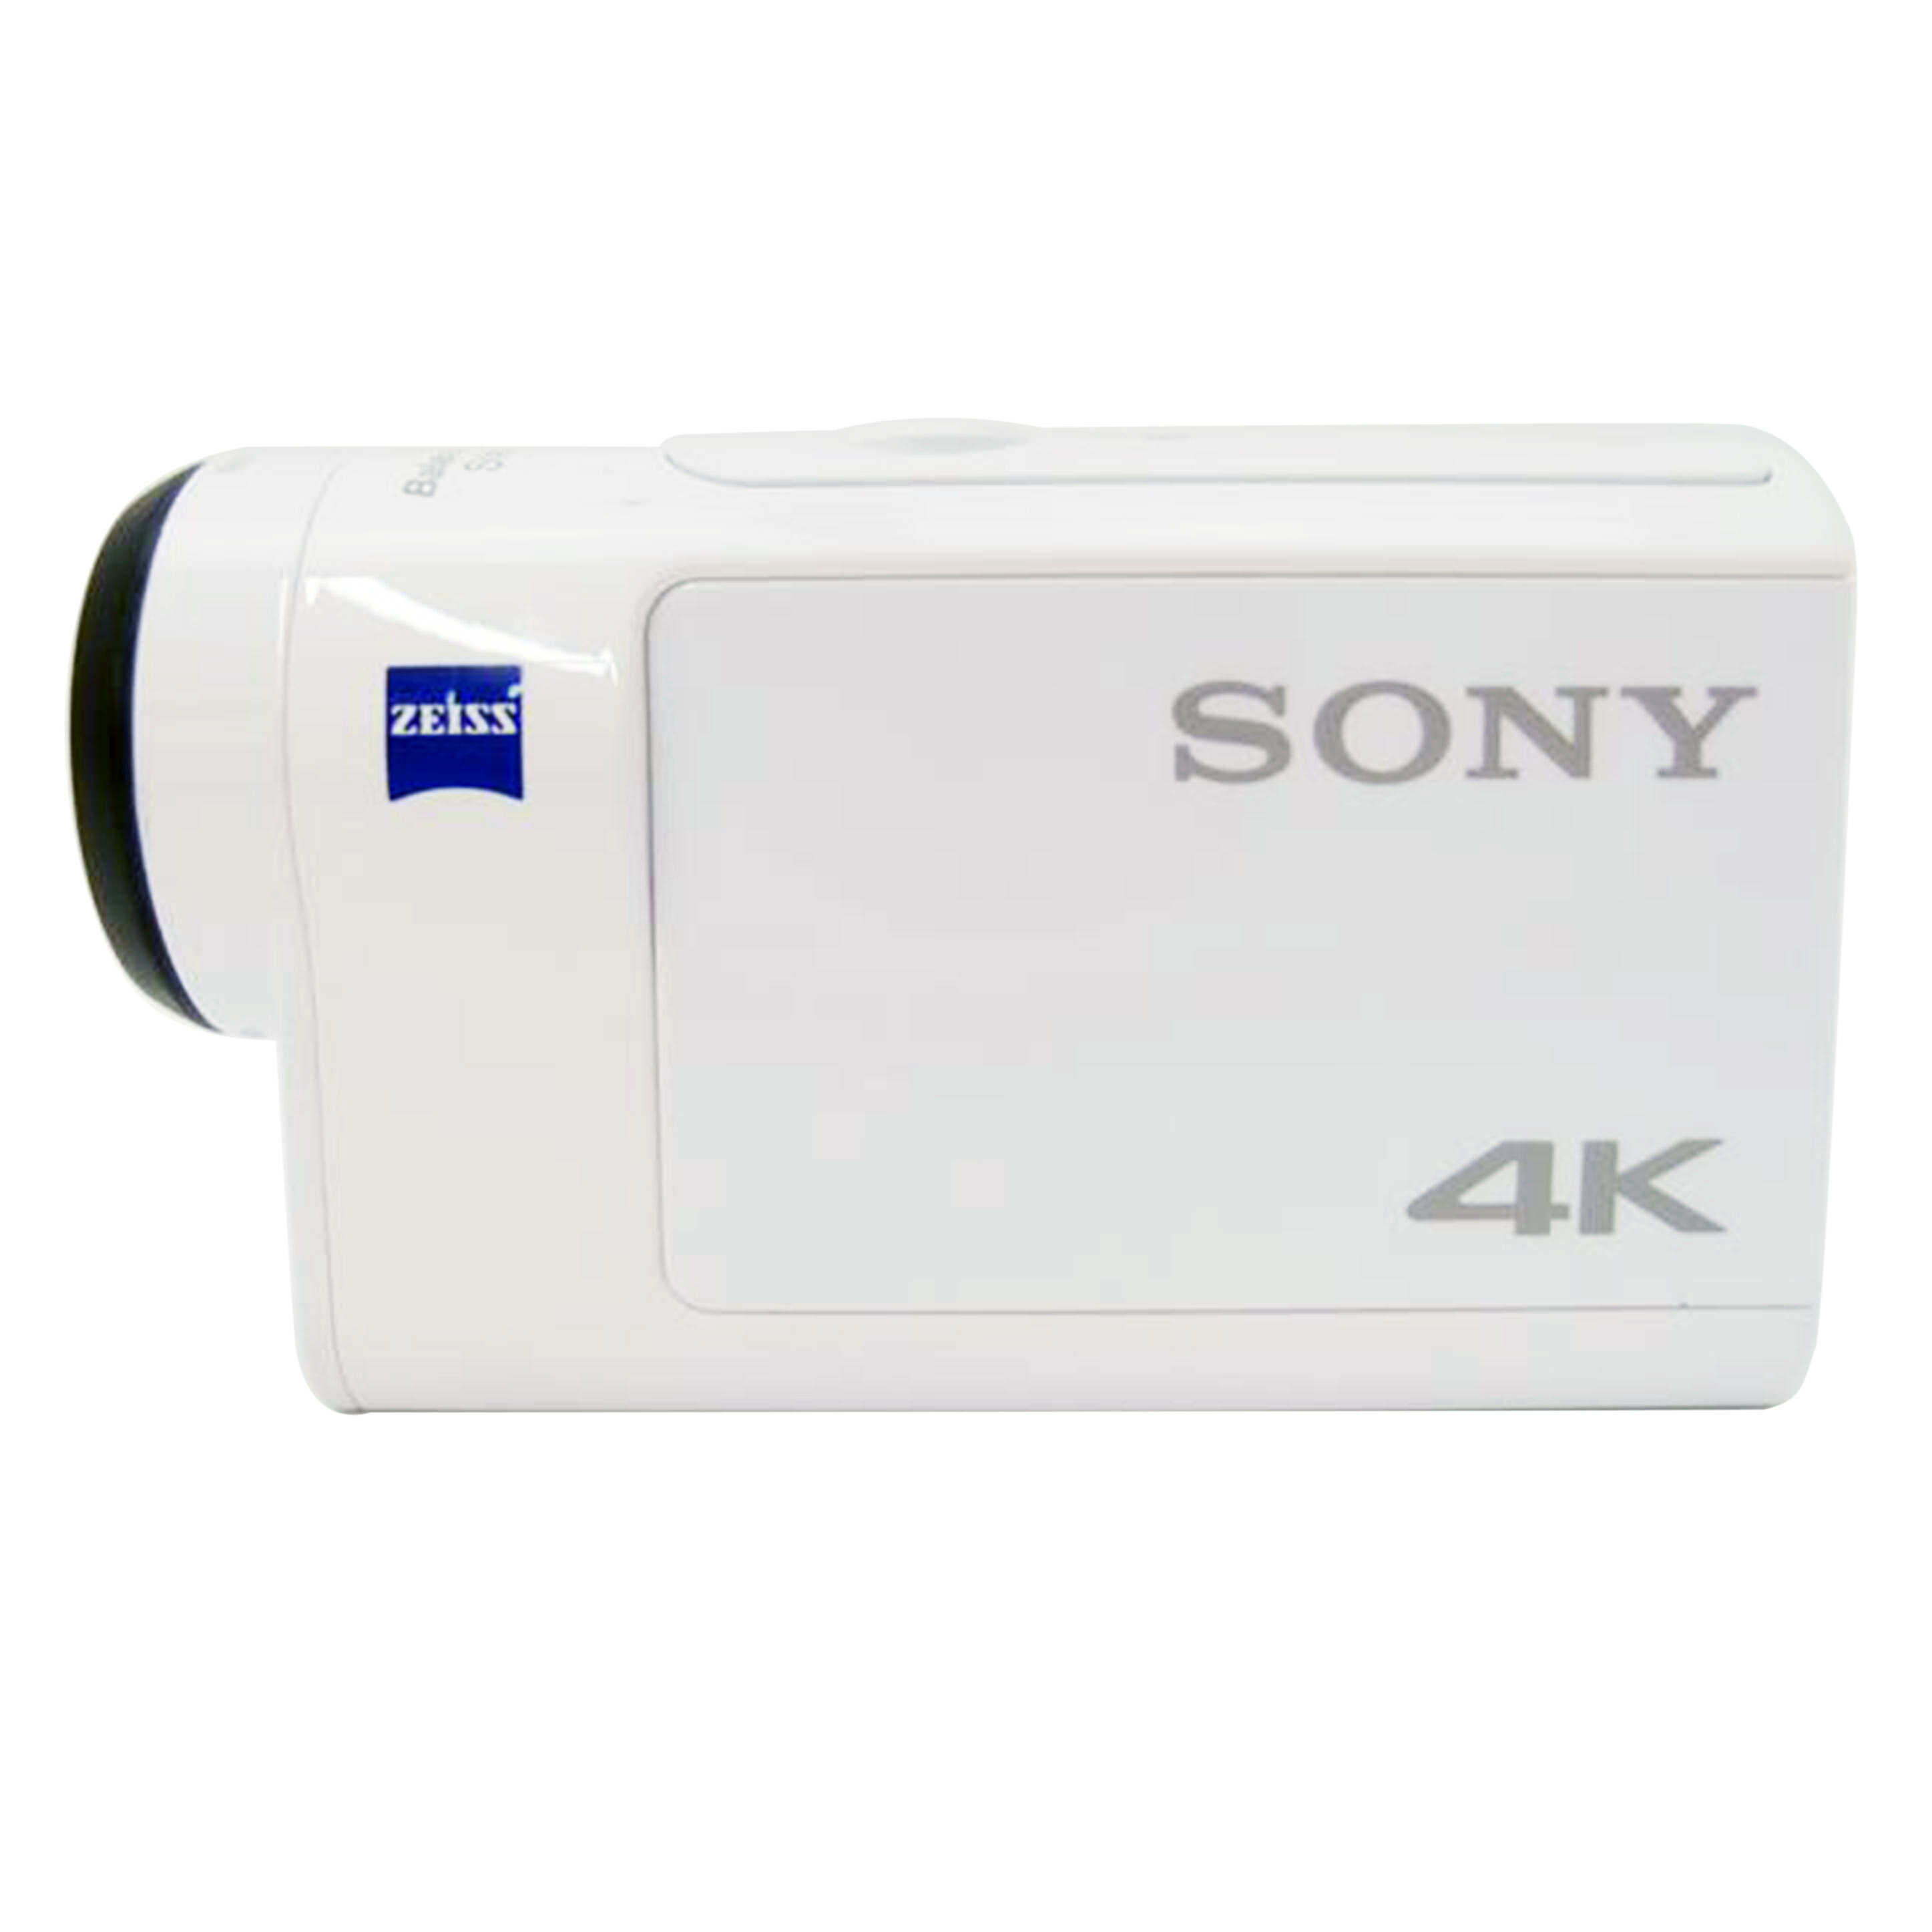 SONY ソニー/4Kアクションカメラ/FDR-X3000R/W/3013131/Aランク/69【中古】